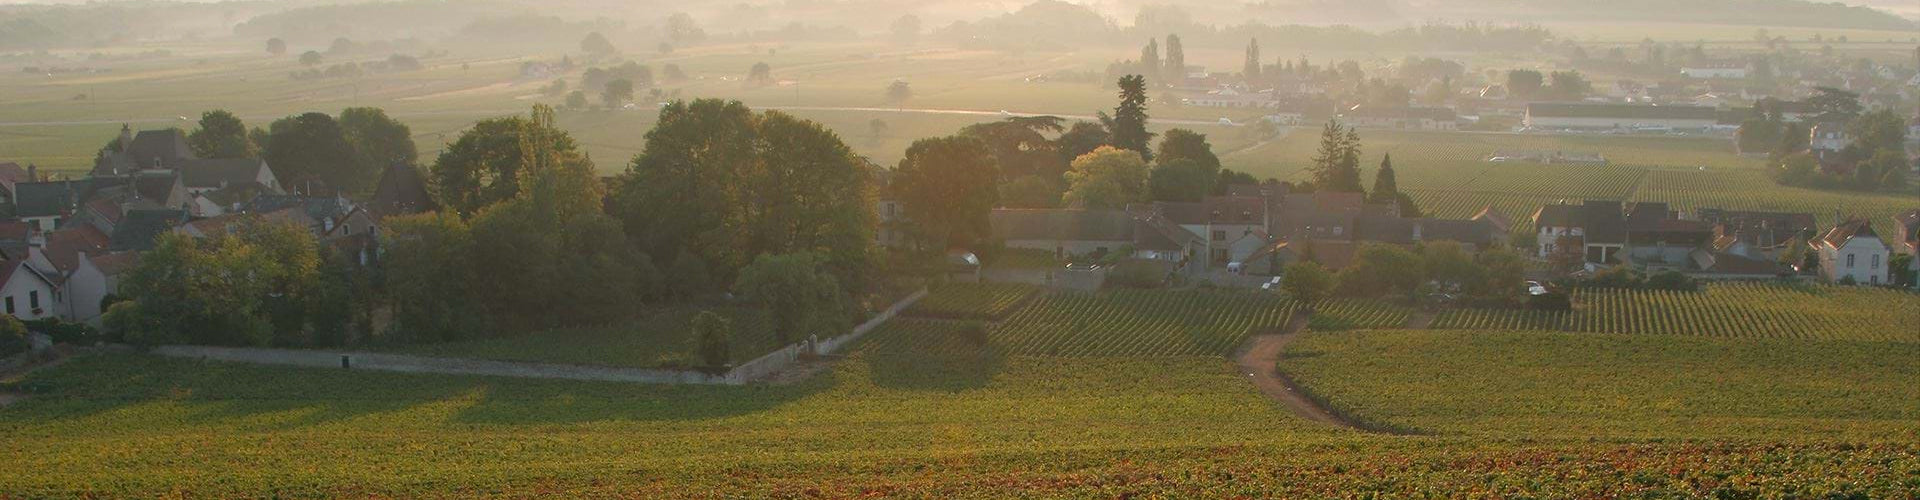 Domaine Perrot-Minot Vineyards in Morey St Denis